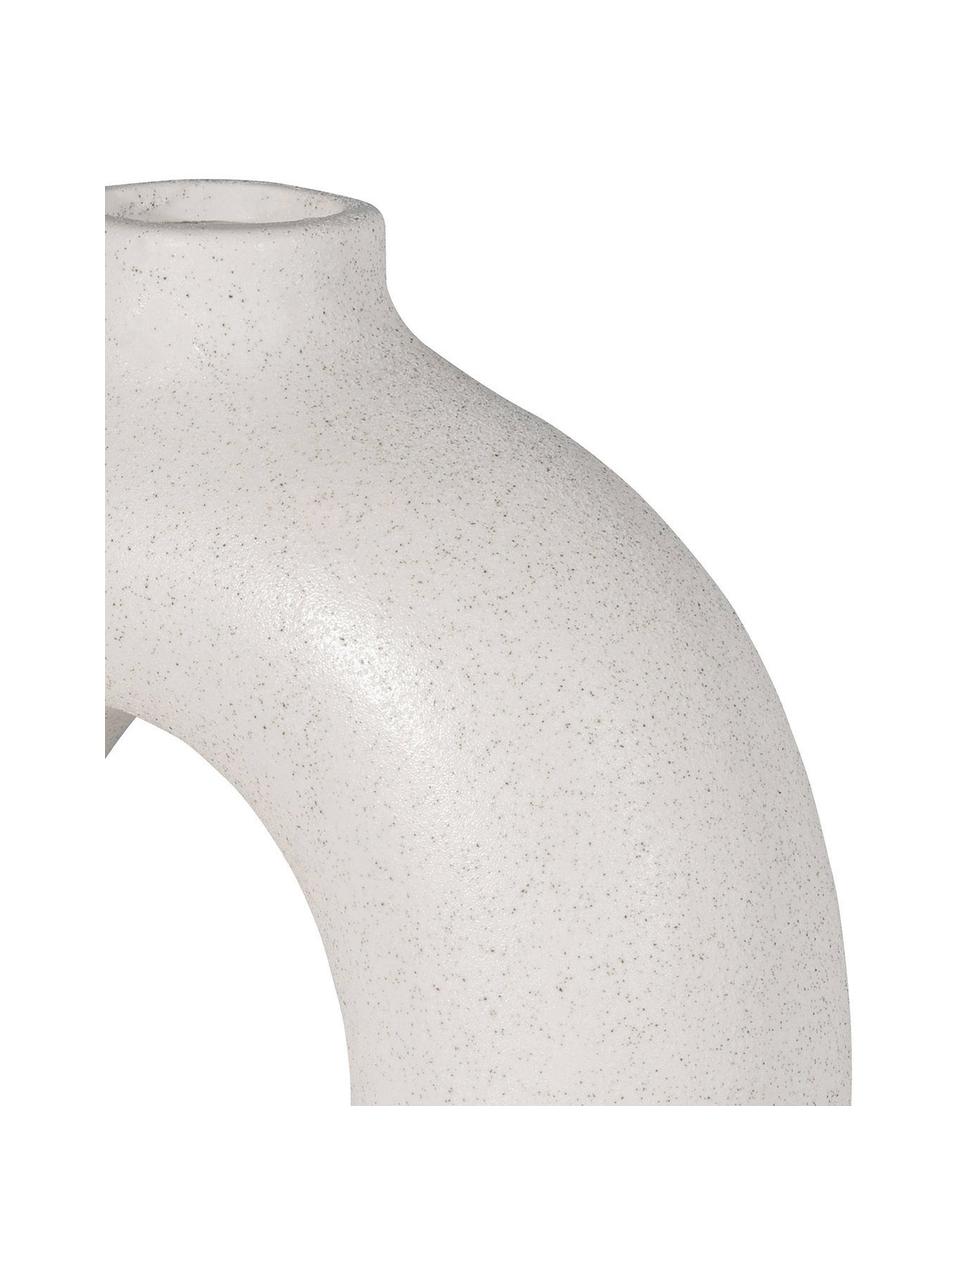 Jarrón de cerámica Rayan, Cerámica, Blanco, An 24 x Al 25 cm